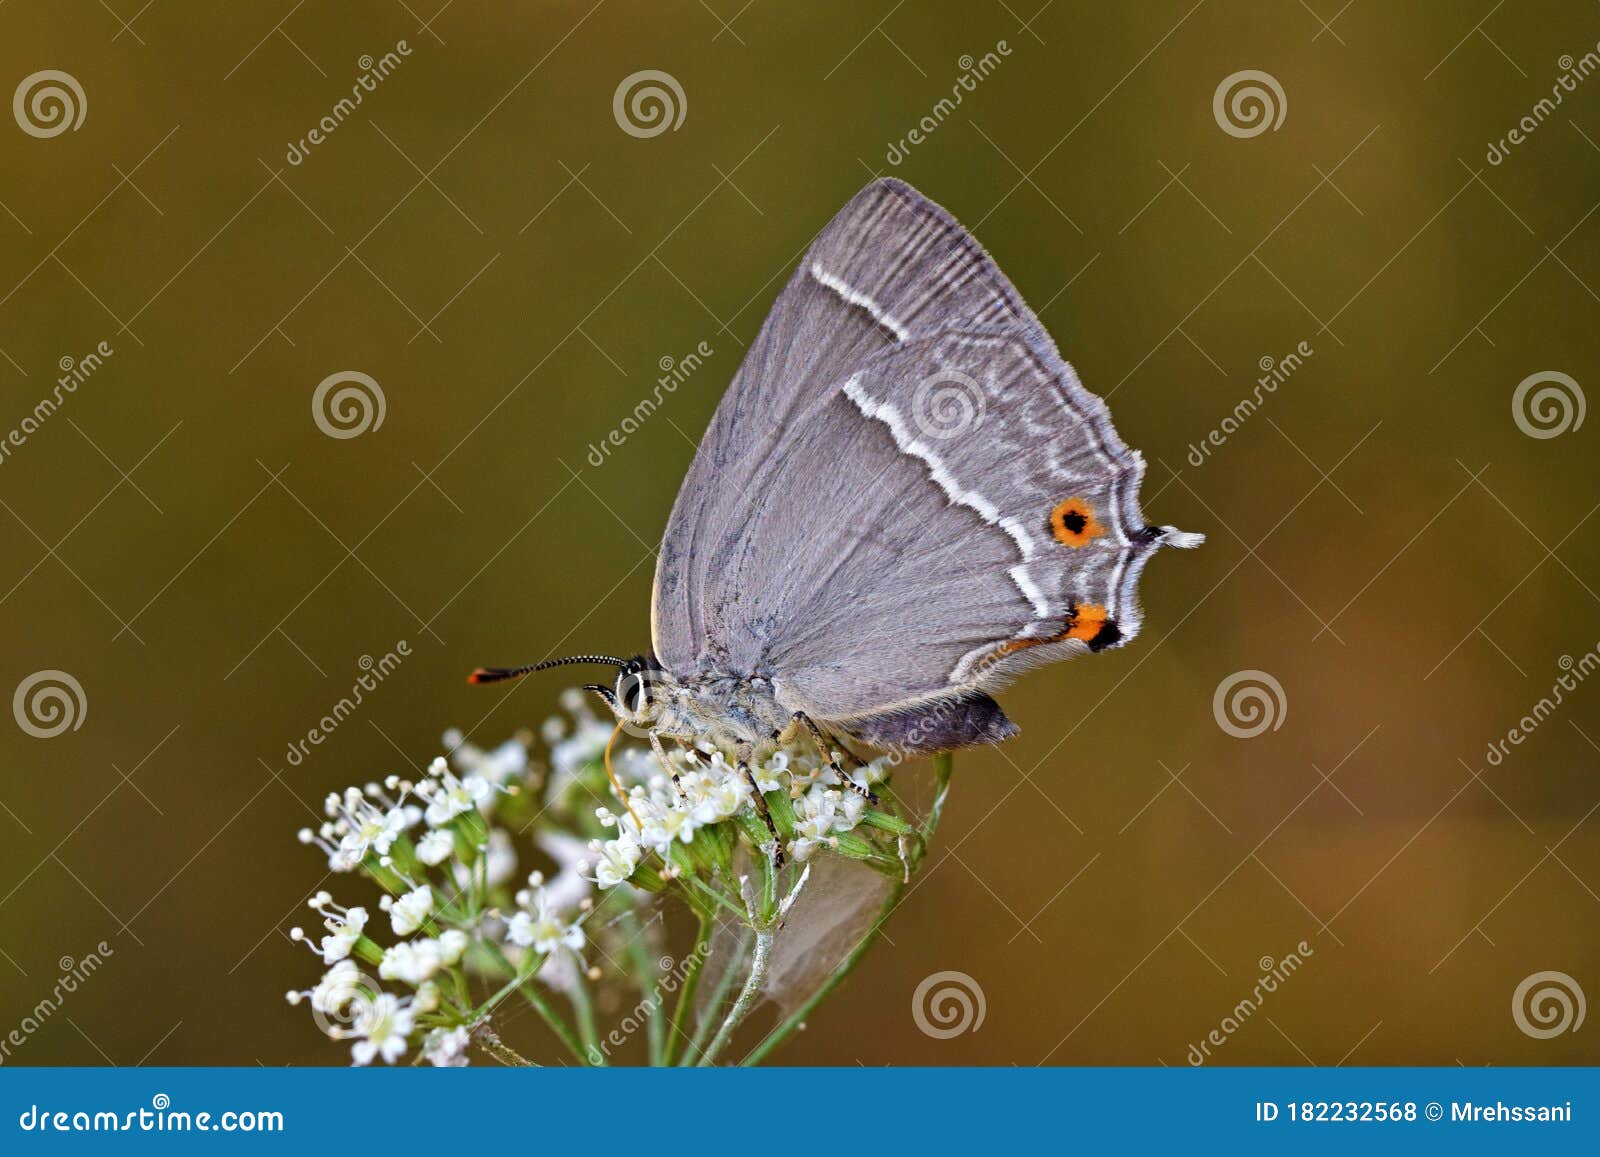 favonius quercus , the purple hairstreak butterfly